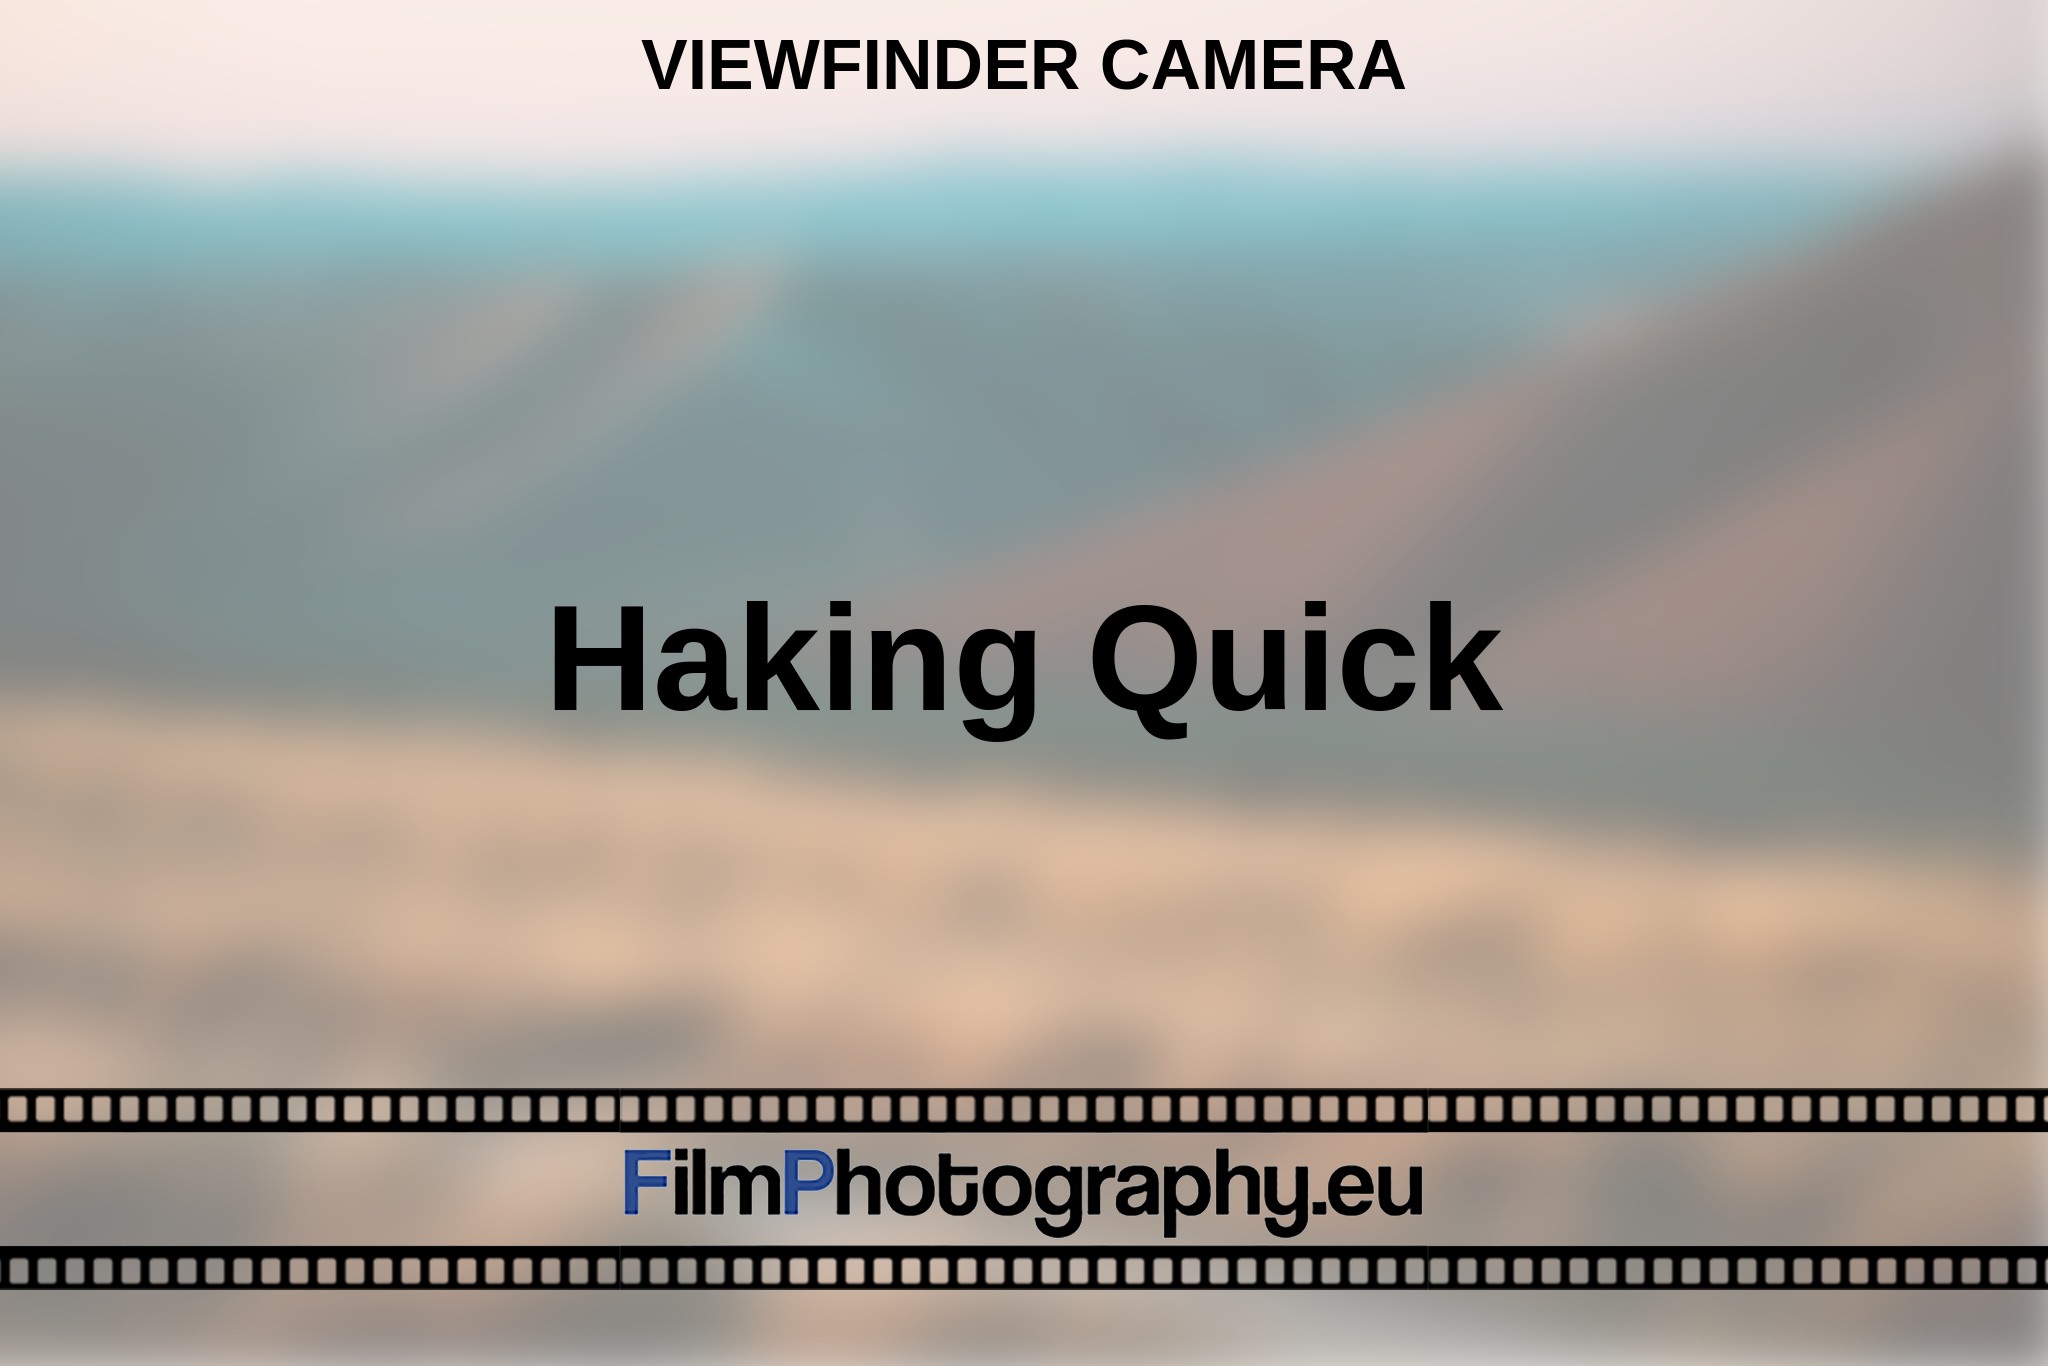 haking-quick-viewfinder-camera-en-bnv.jpg